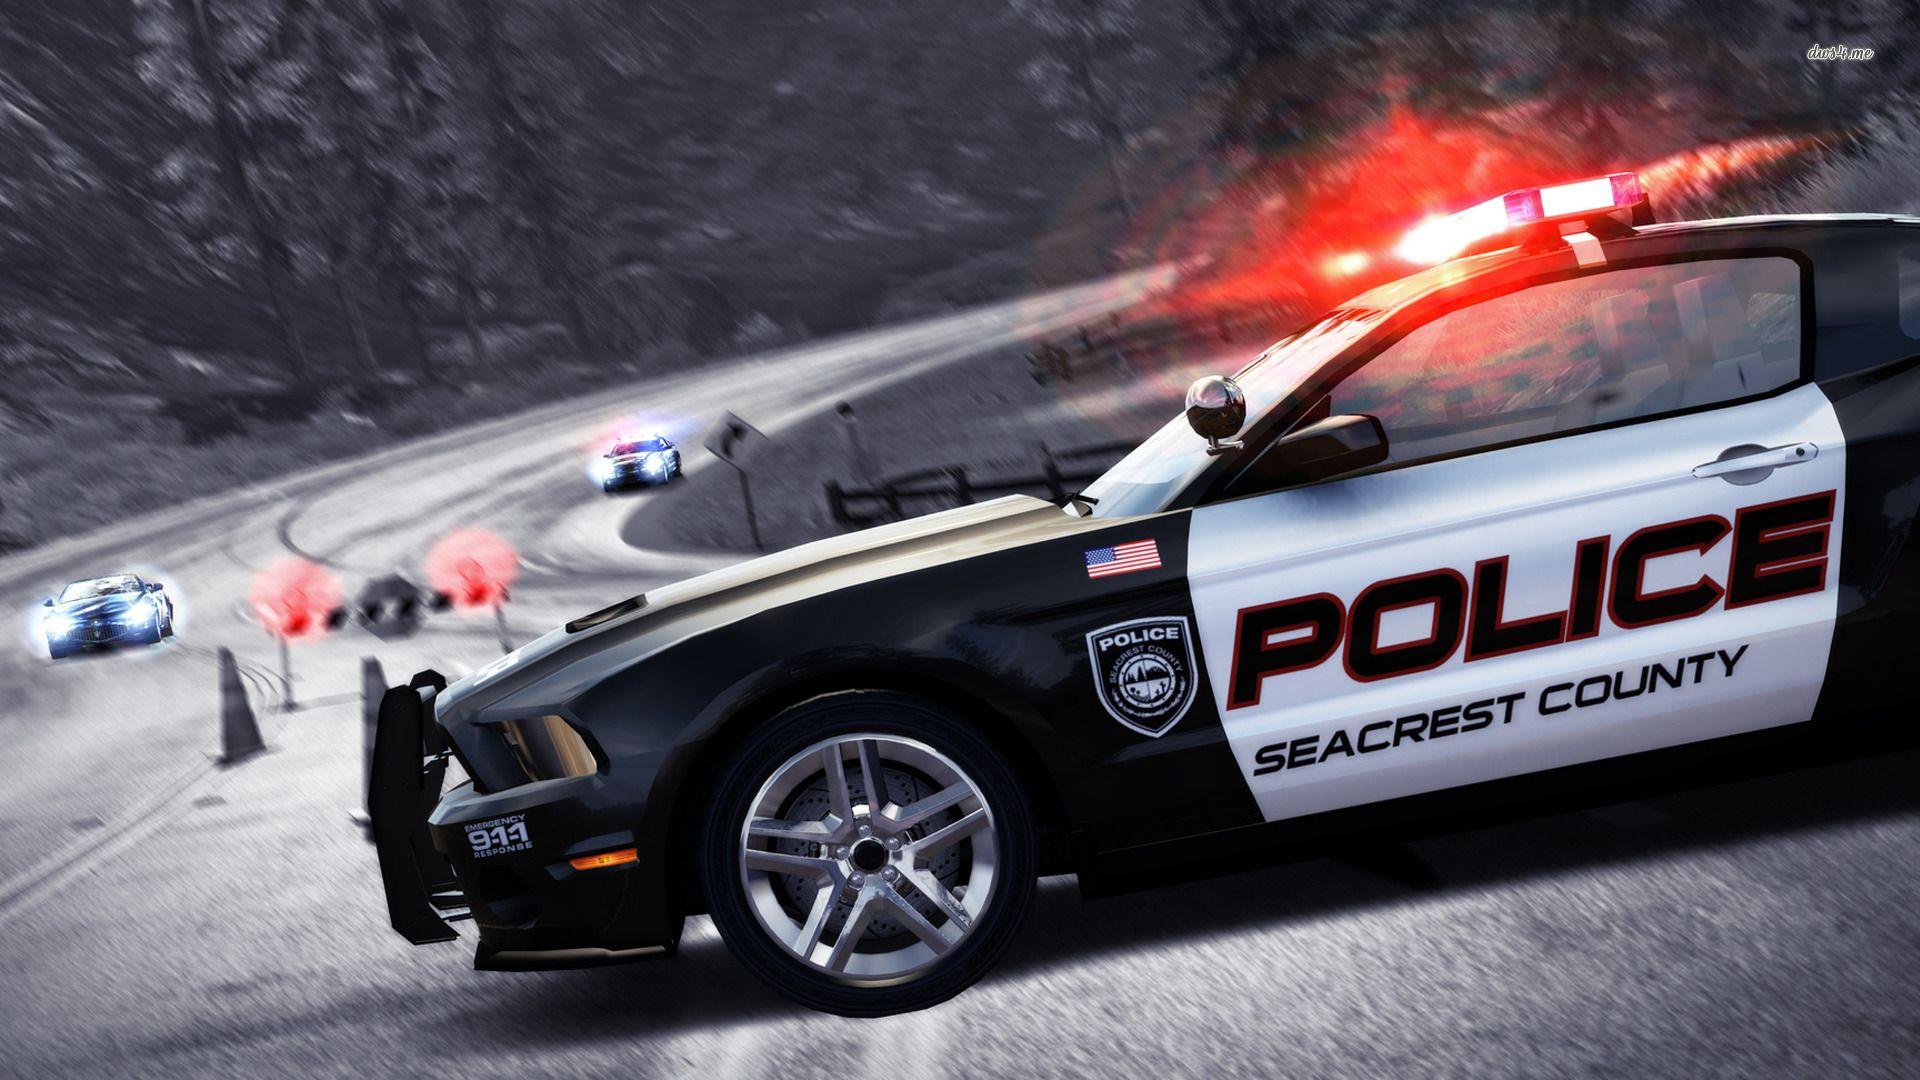 Best Police Car Desktop Wallpaper HD Widescreen Wide A Long Of